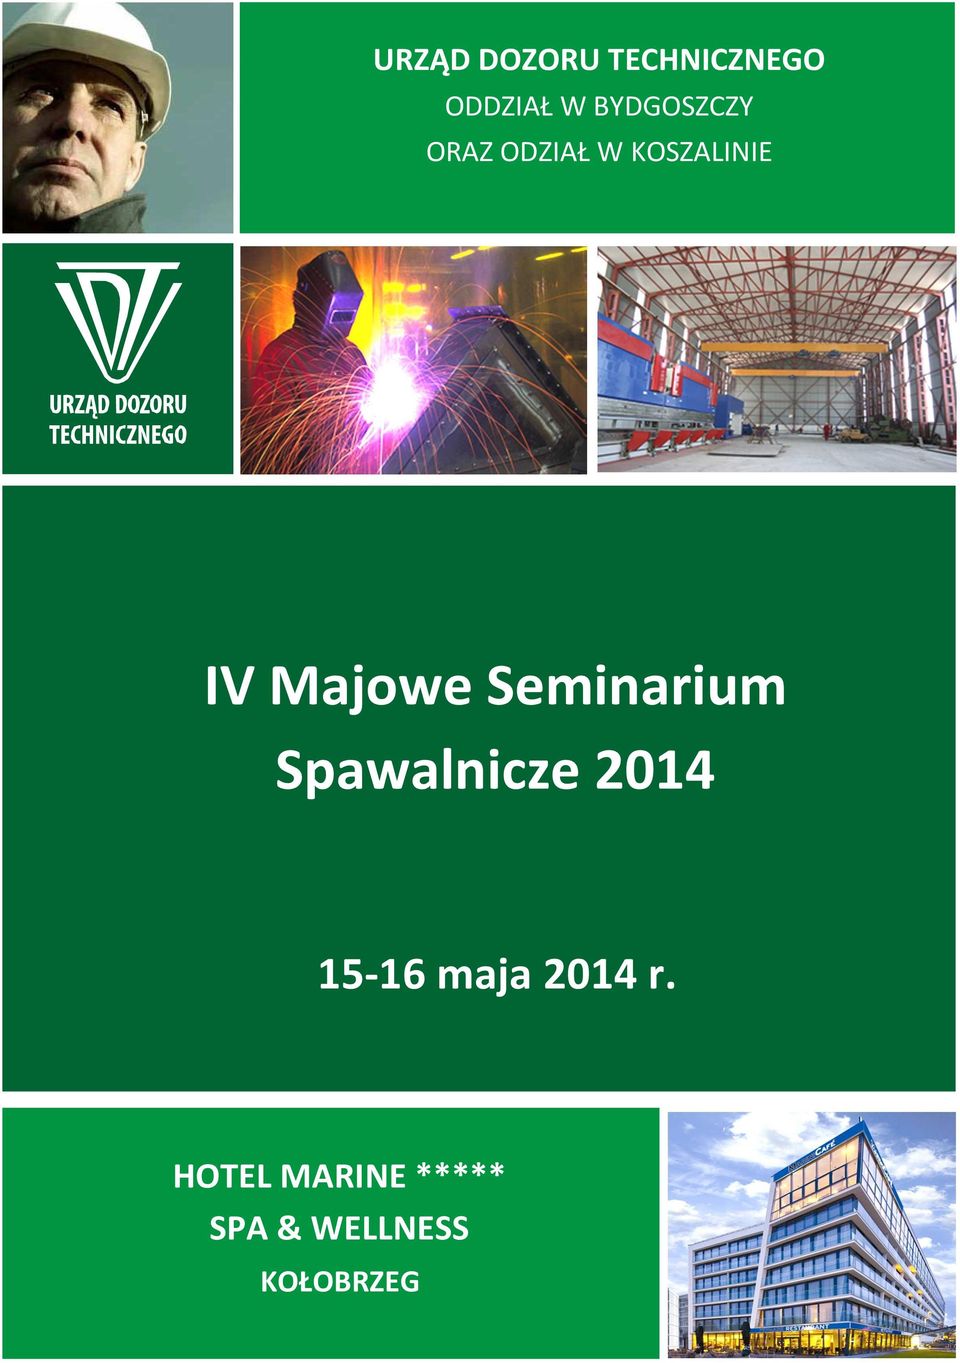 Majowe Seminarium Spawalnicze 2014 15-16